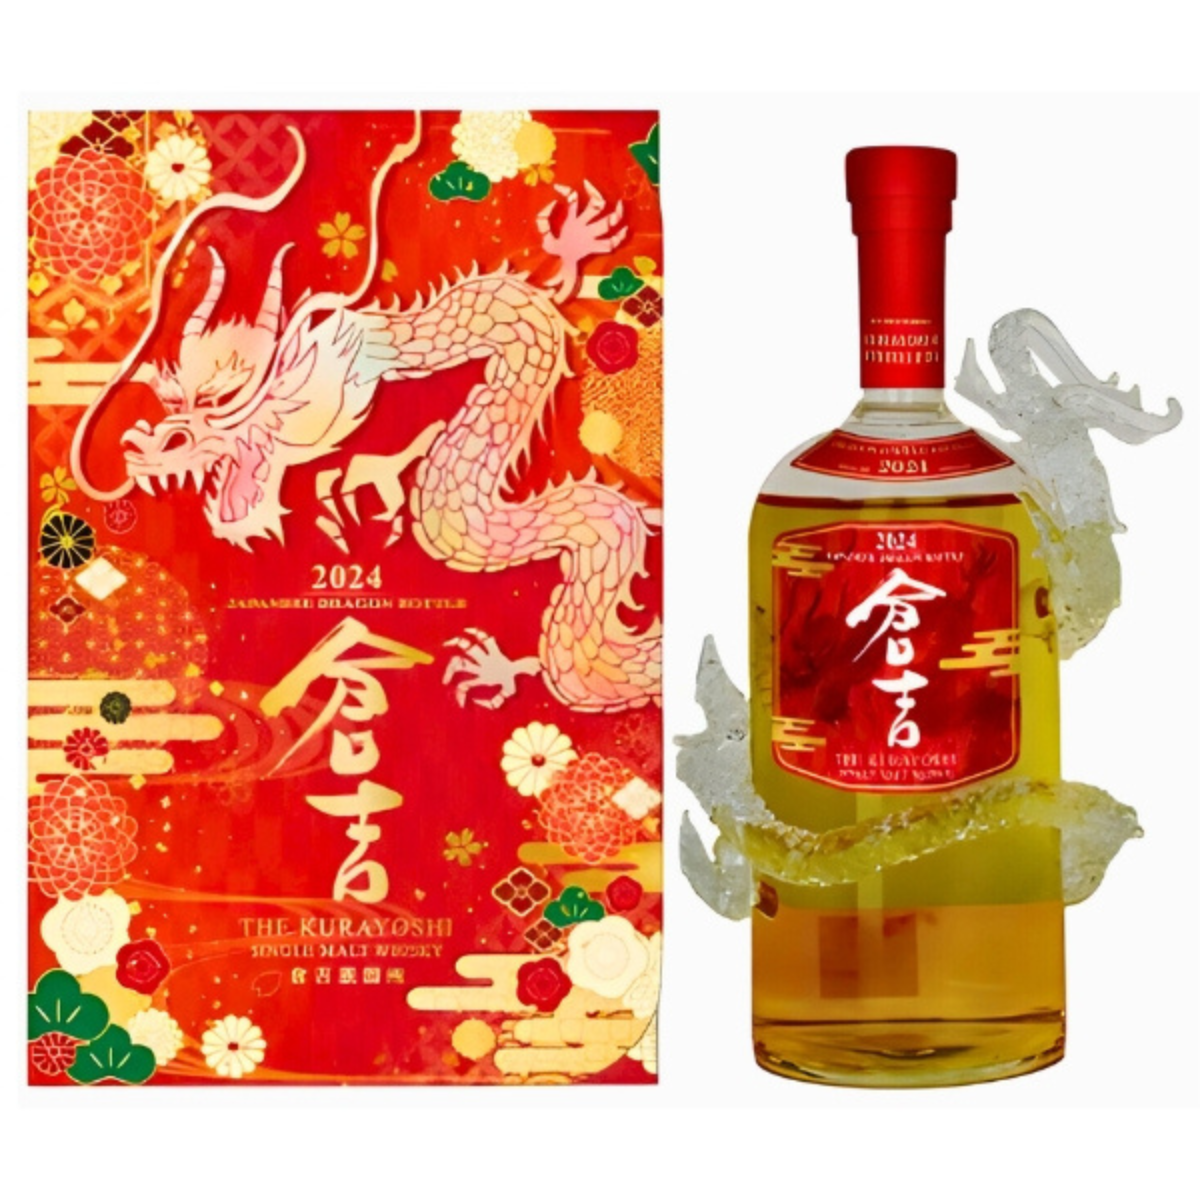 Matsui Single Malt Whisky The Kurayoshi 2024 Year Of The Dragon Bottle 倉吉蒸餾所倉吉單一麥芽威士忌2024龍年禮盒